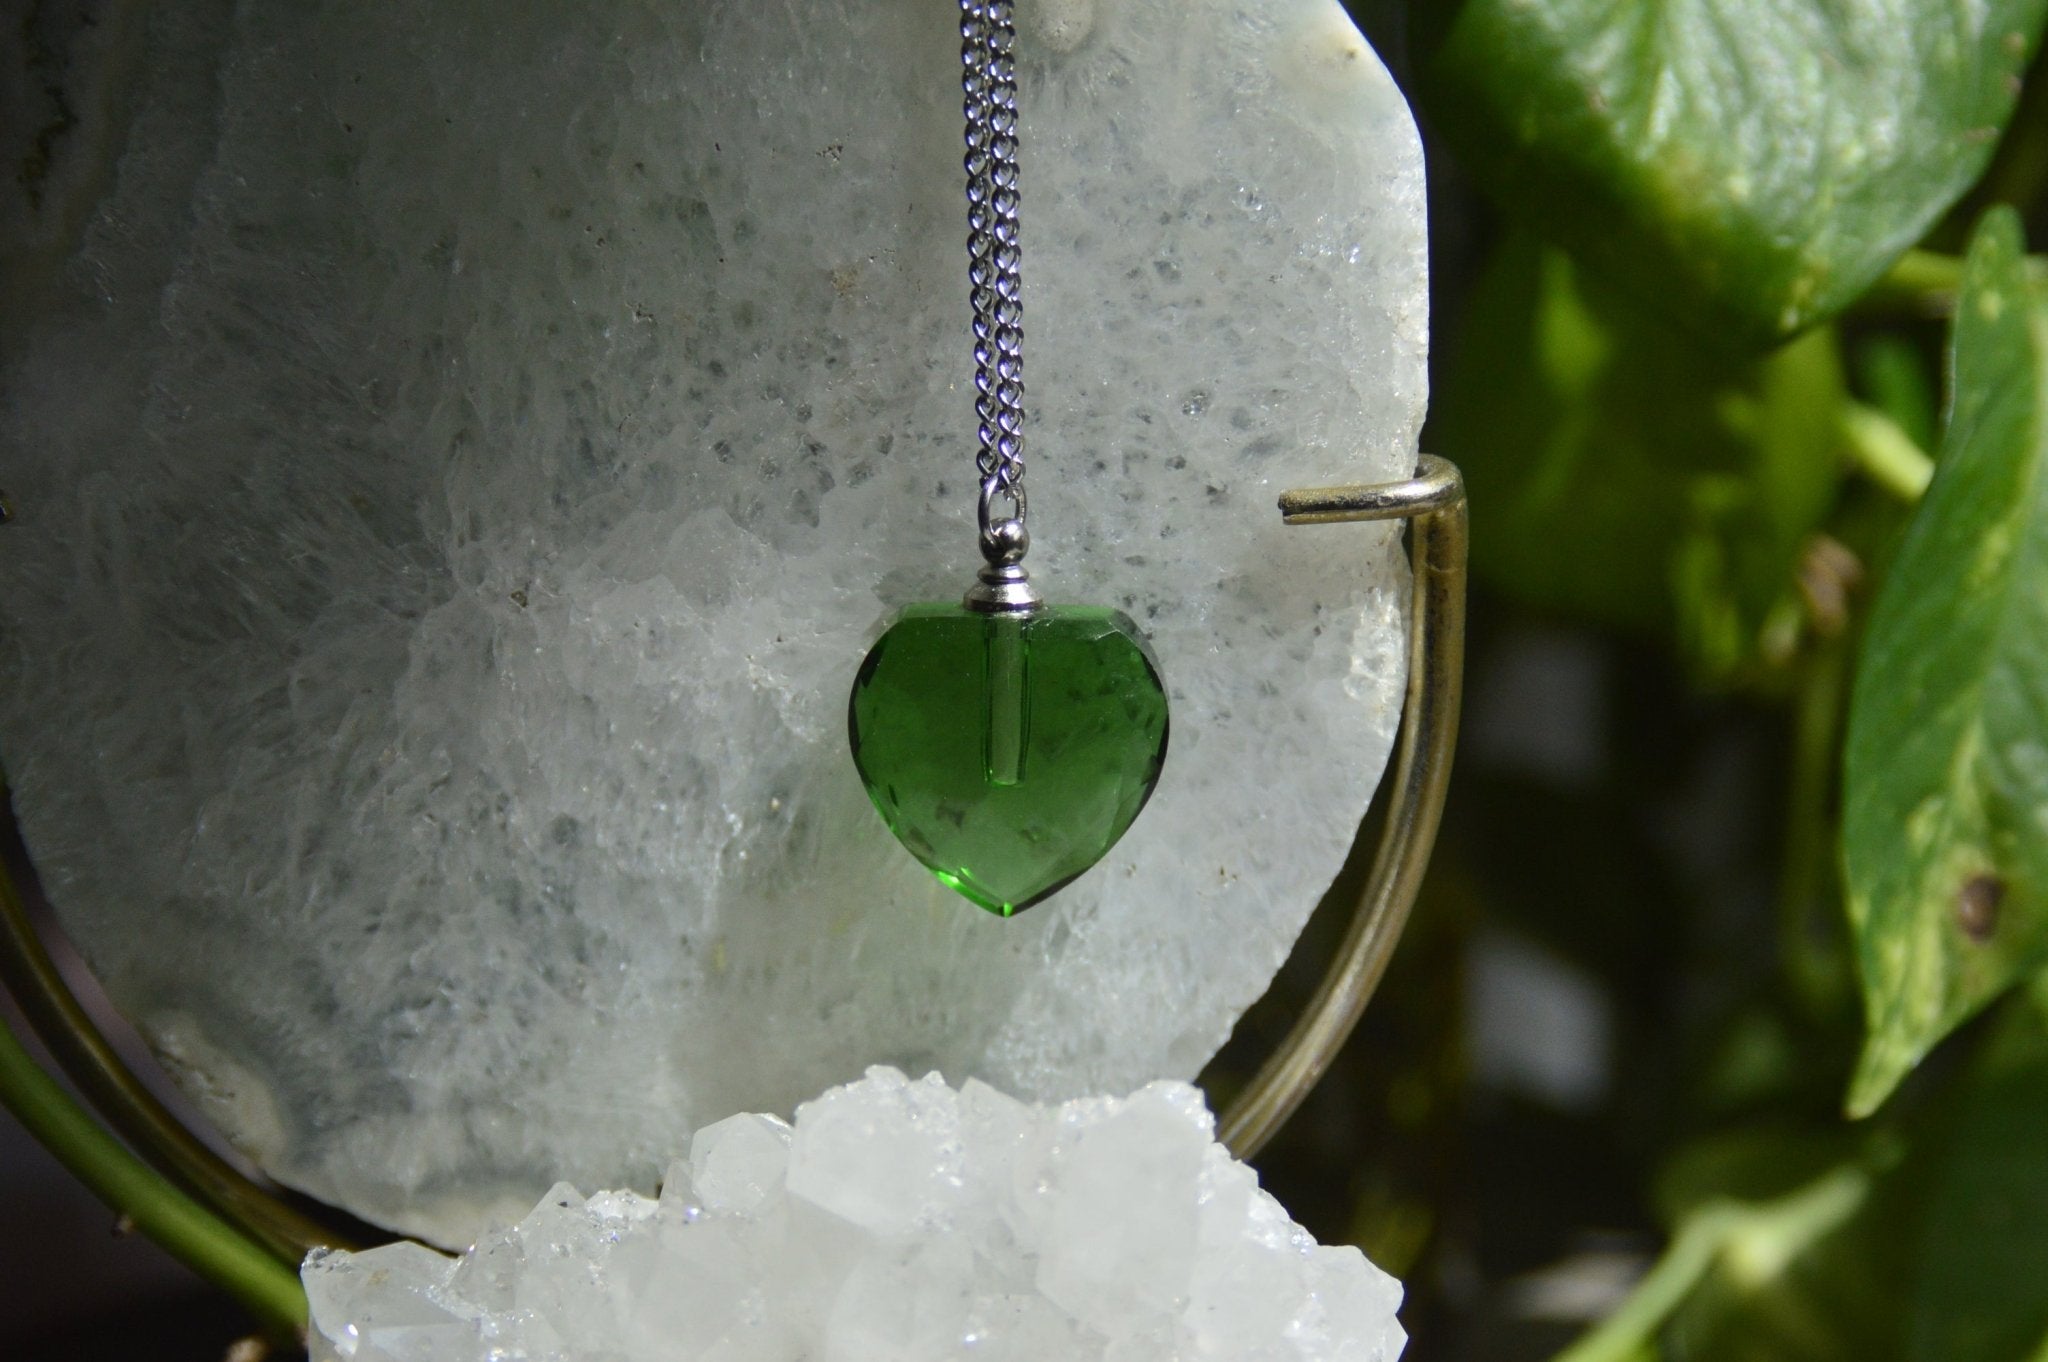 Green Leaf Perfume Bottle Necklace - We Love Brass